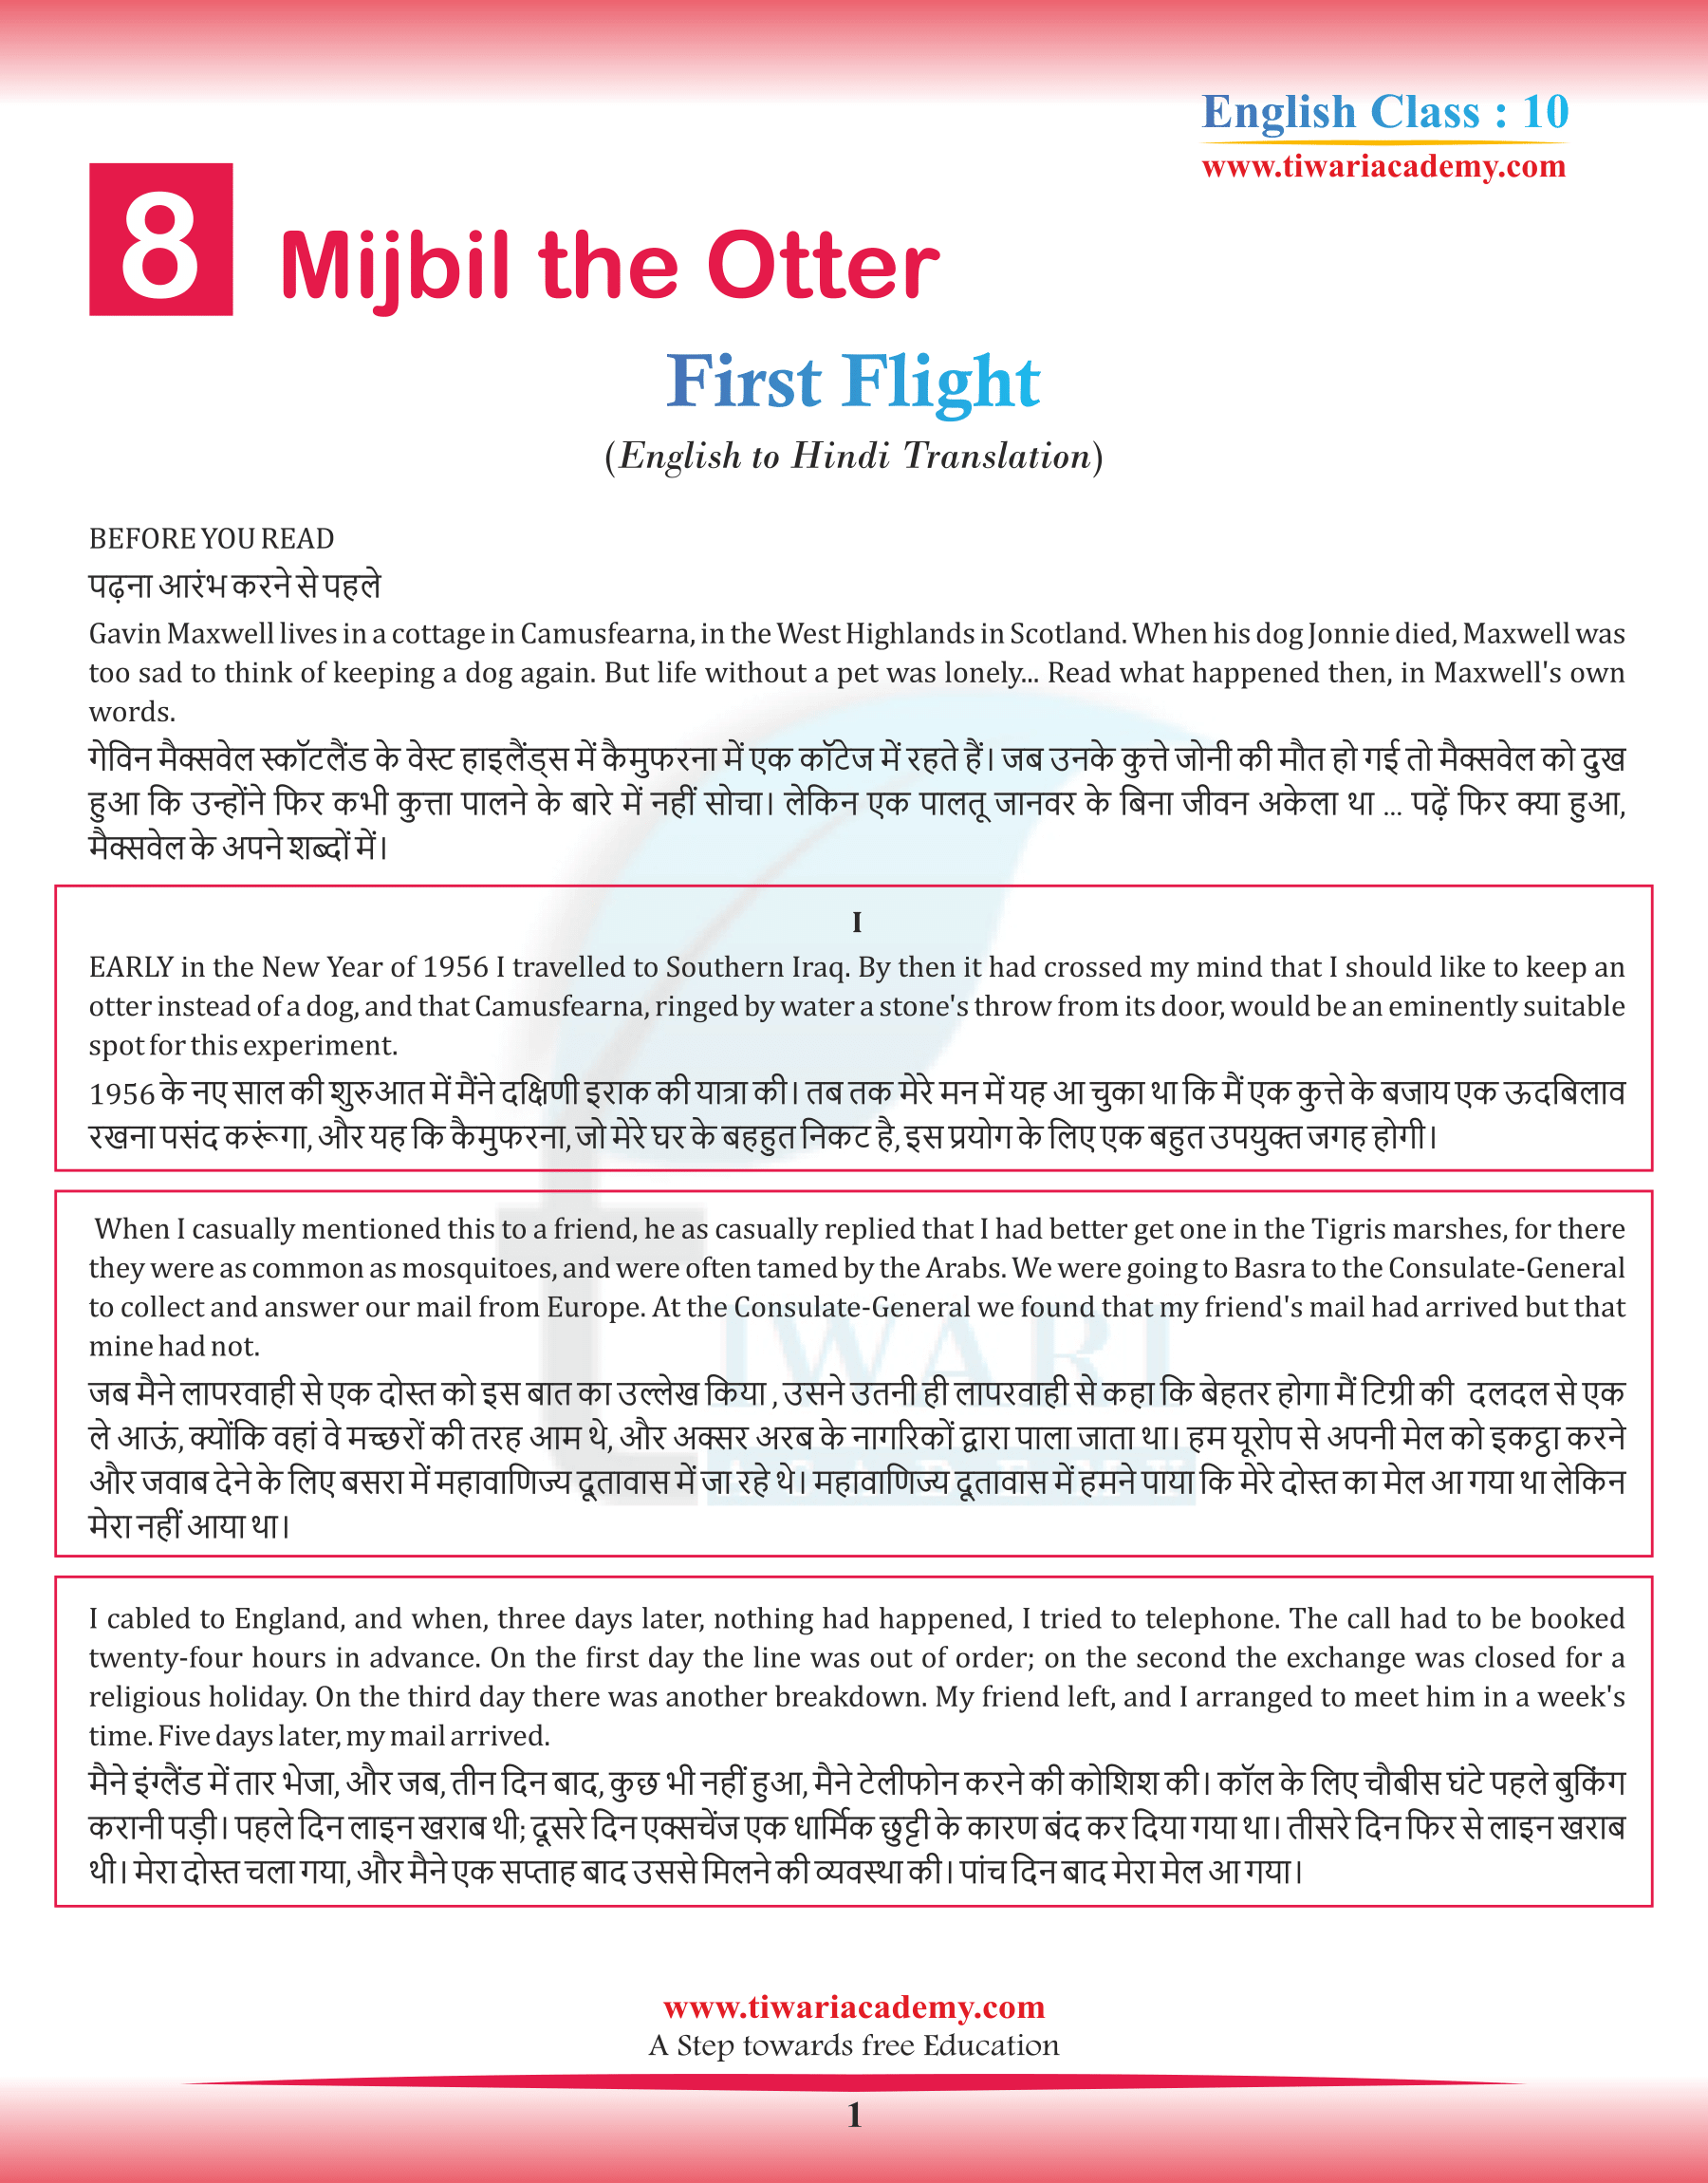 Class 10 English First Flight Chapter 8 Mijbil the Otter in Hindi Medium